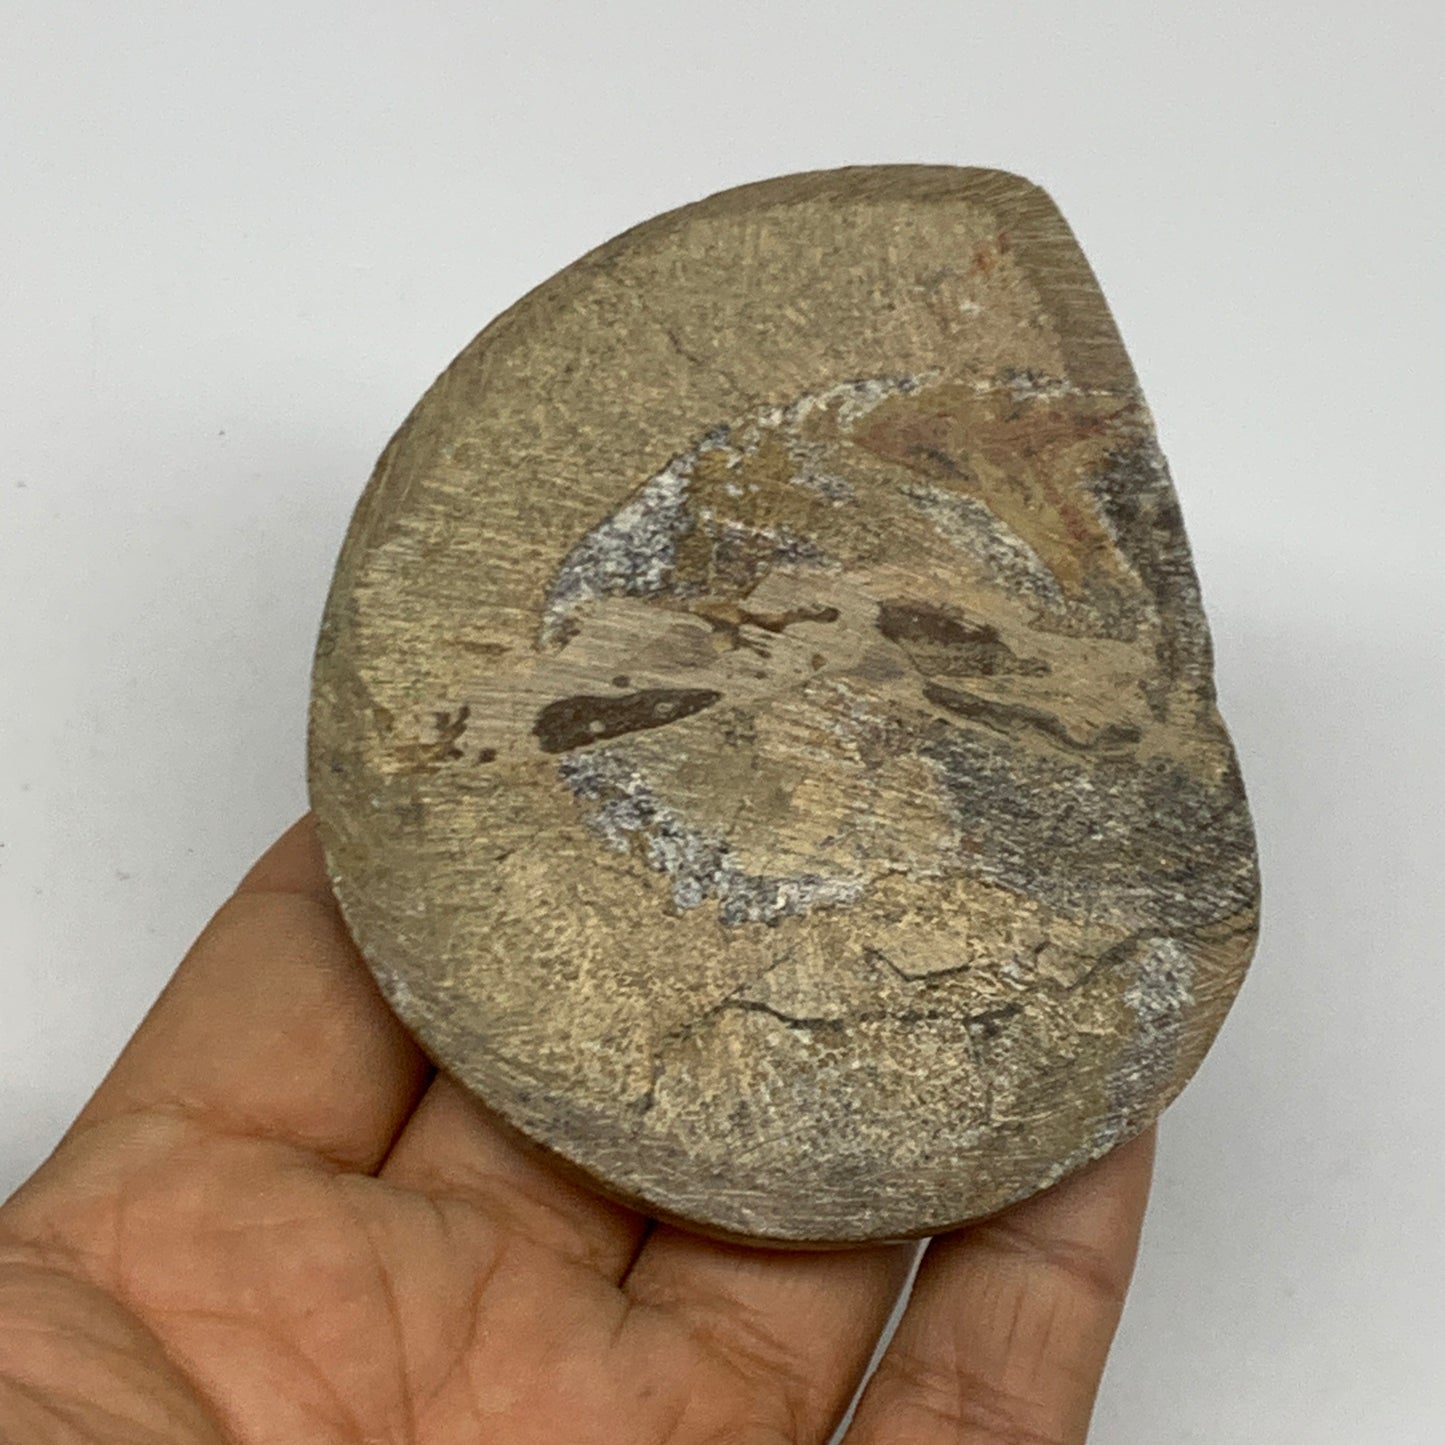 89.5g, 3.6"x2.7"x0.3", Goniatite (Button) Ammonite Polished Fossils, B30079